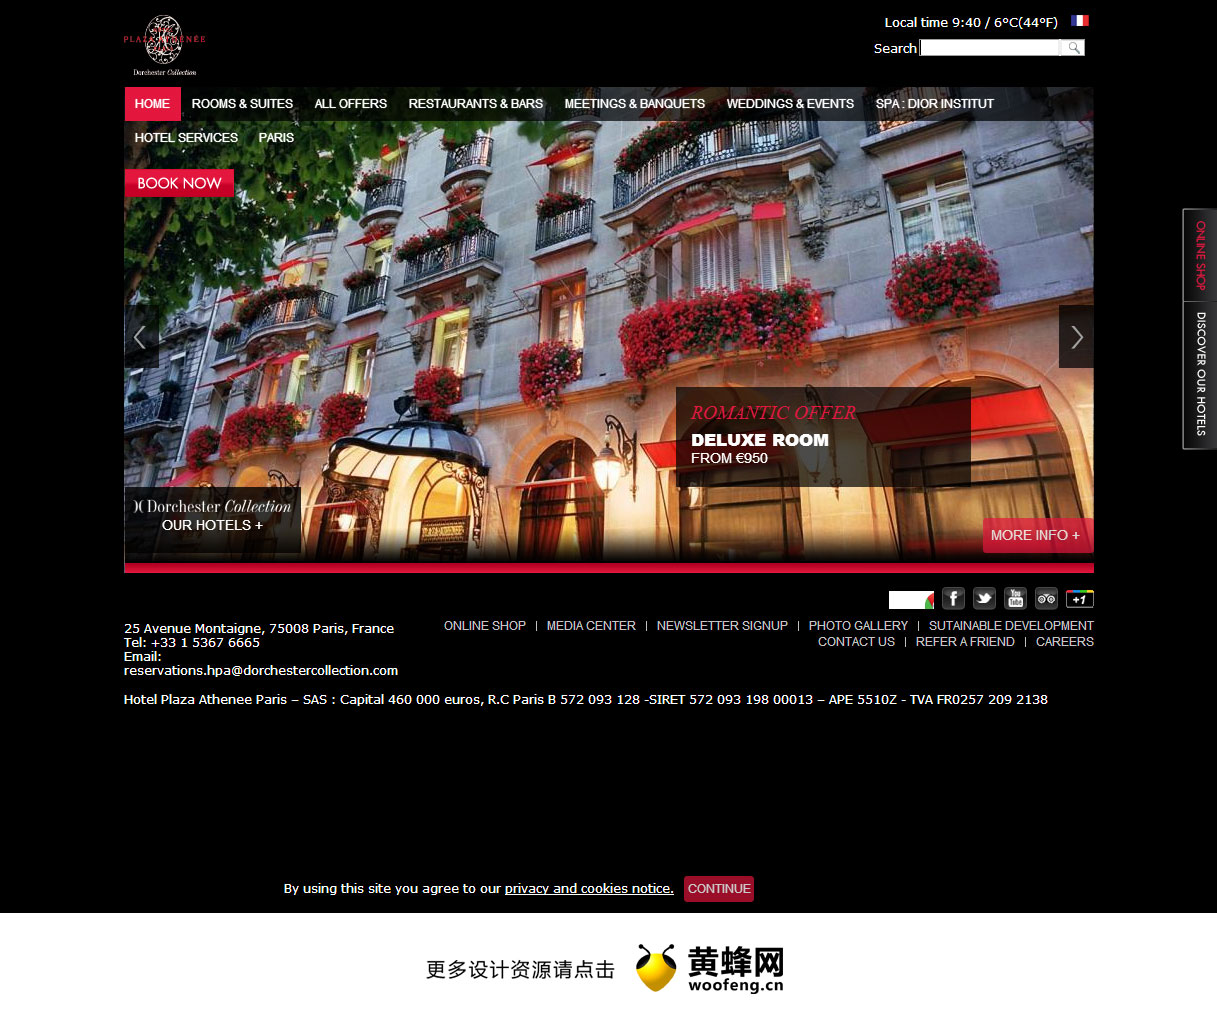 Plaza Athenee酒店，巴黎五星级酒店，来源自黄蜂网https://woofeng.cn/web/